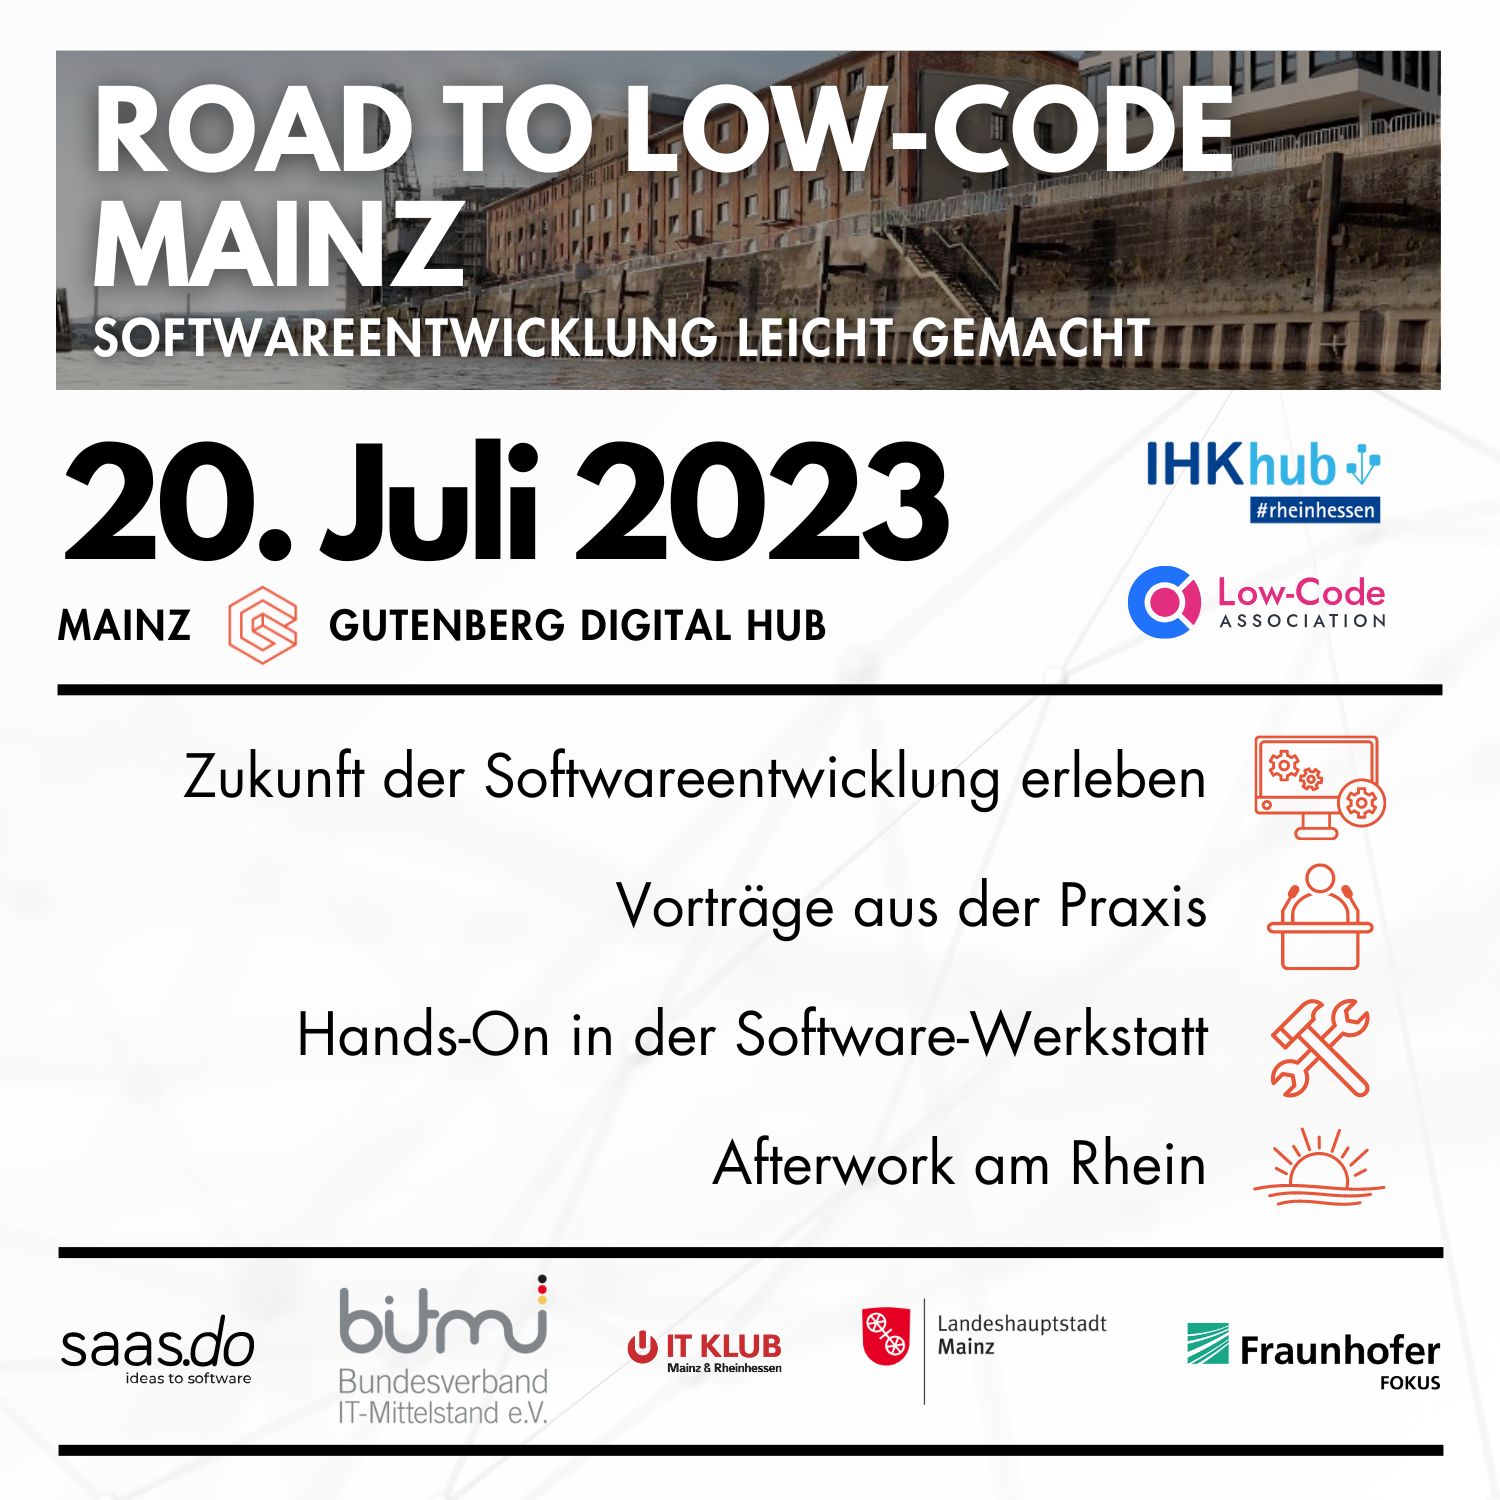 Road to Low-Code Mainz